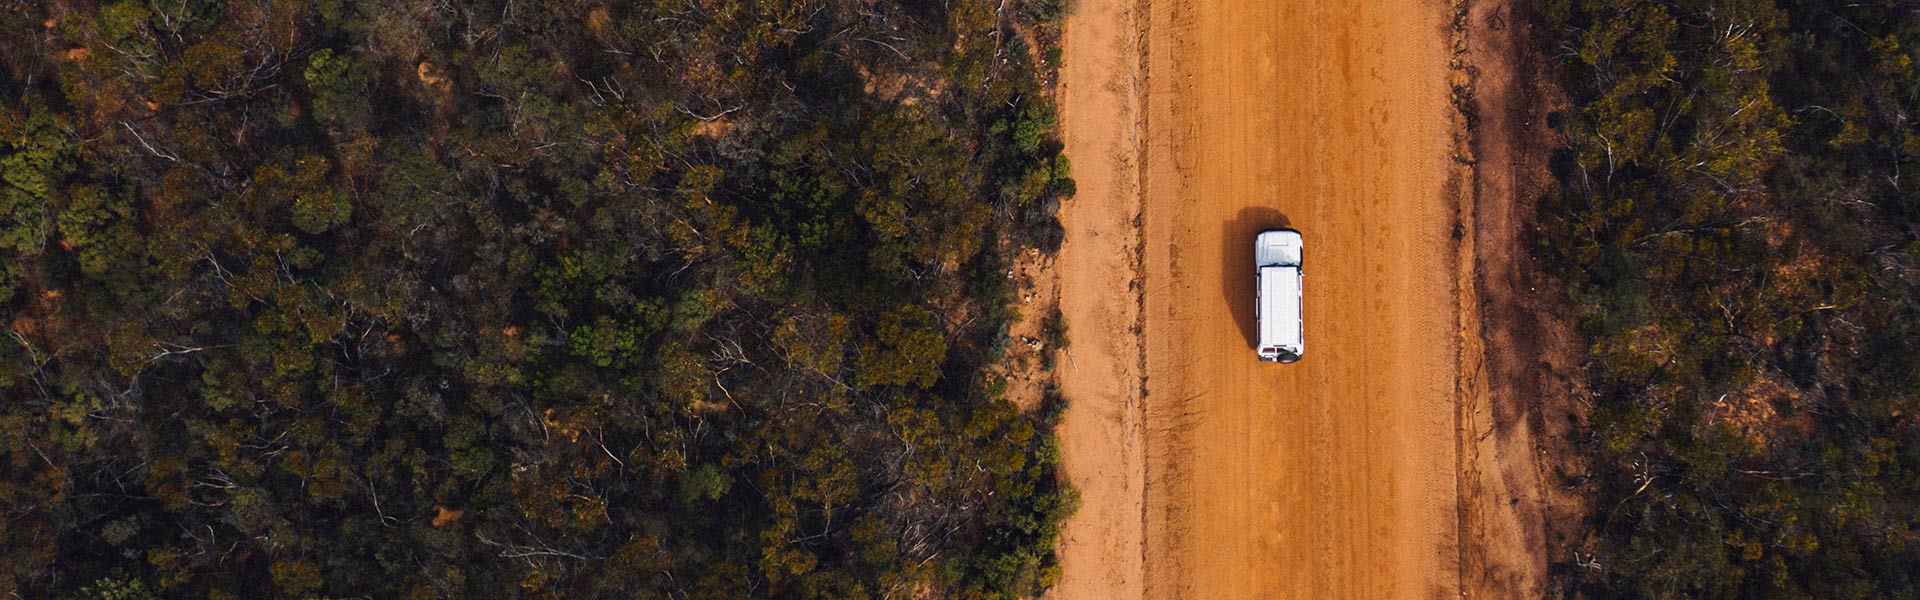 Rental Campervan Driving in Australia